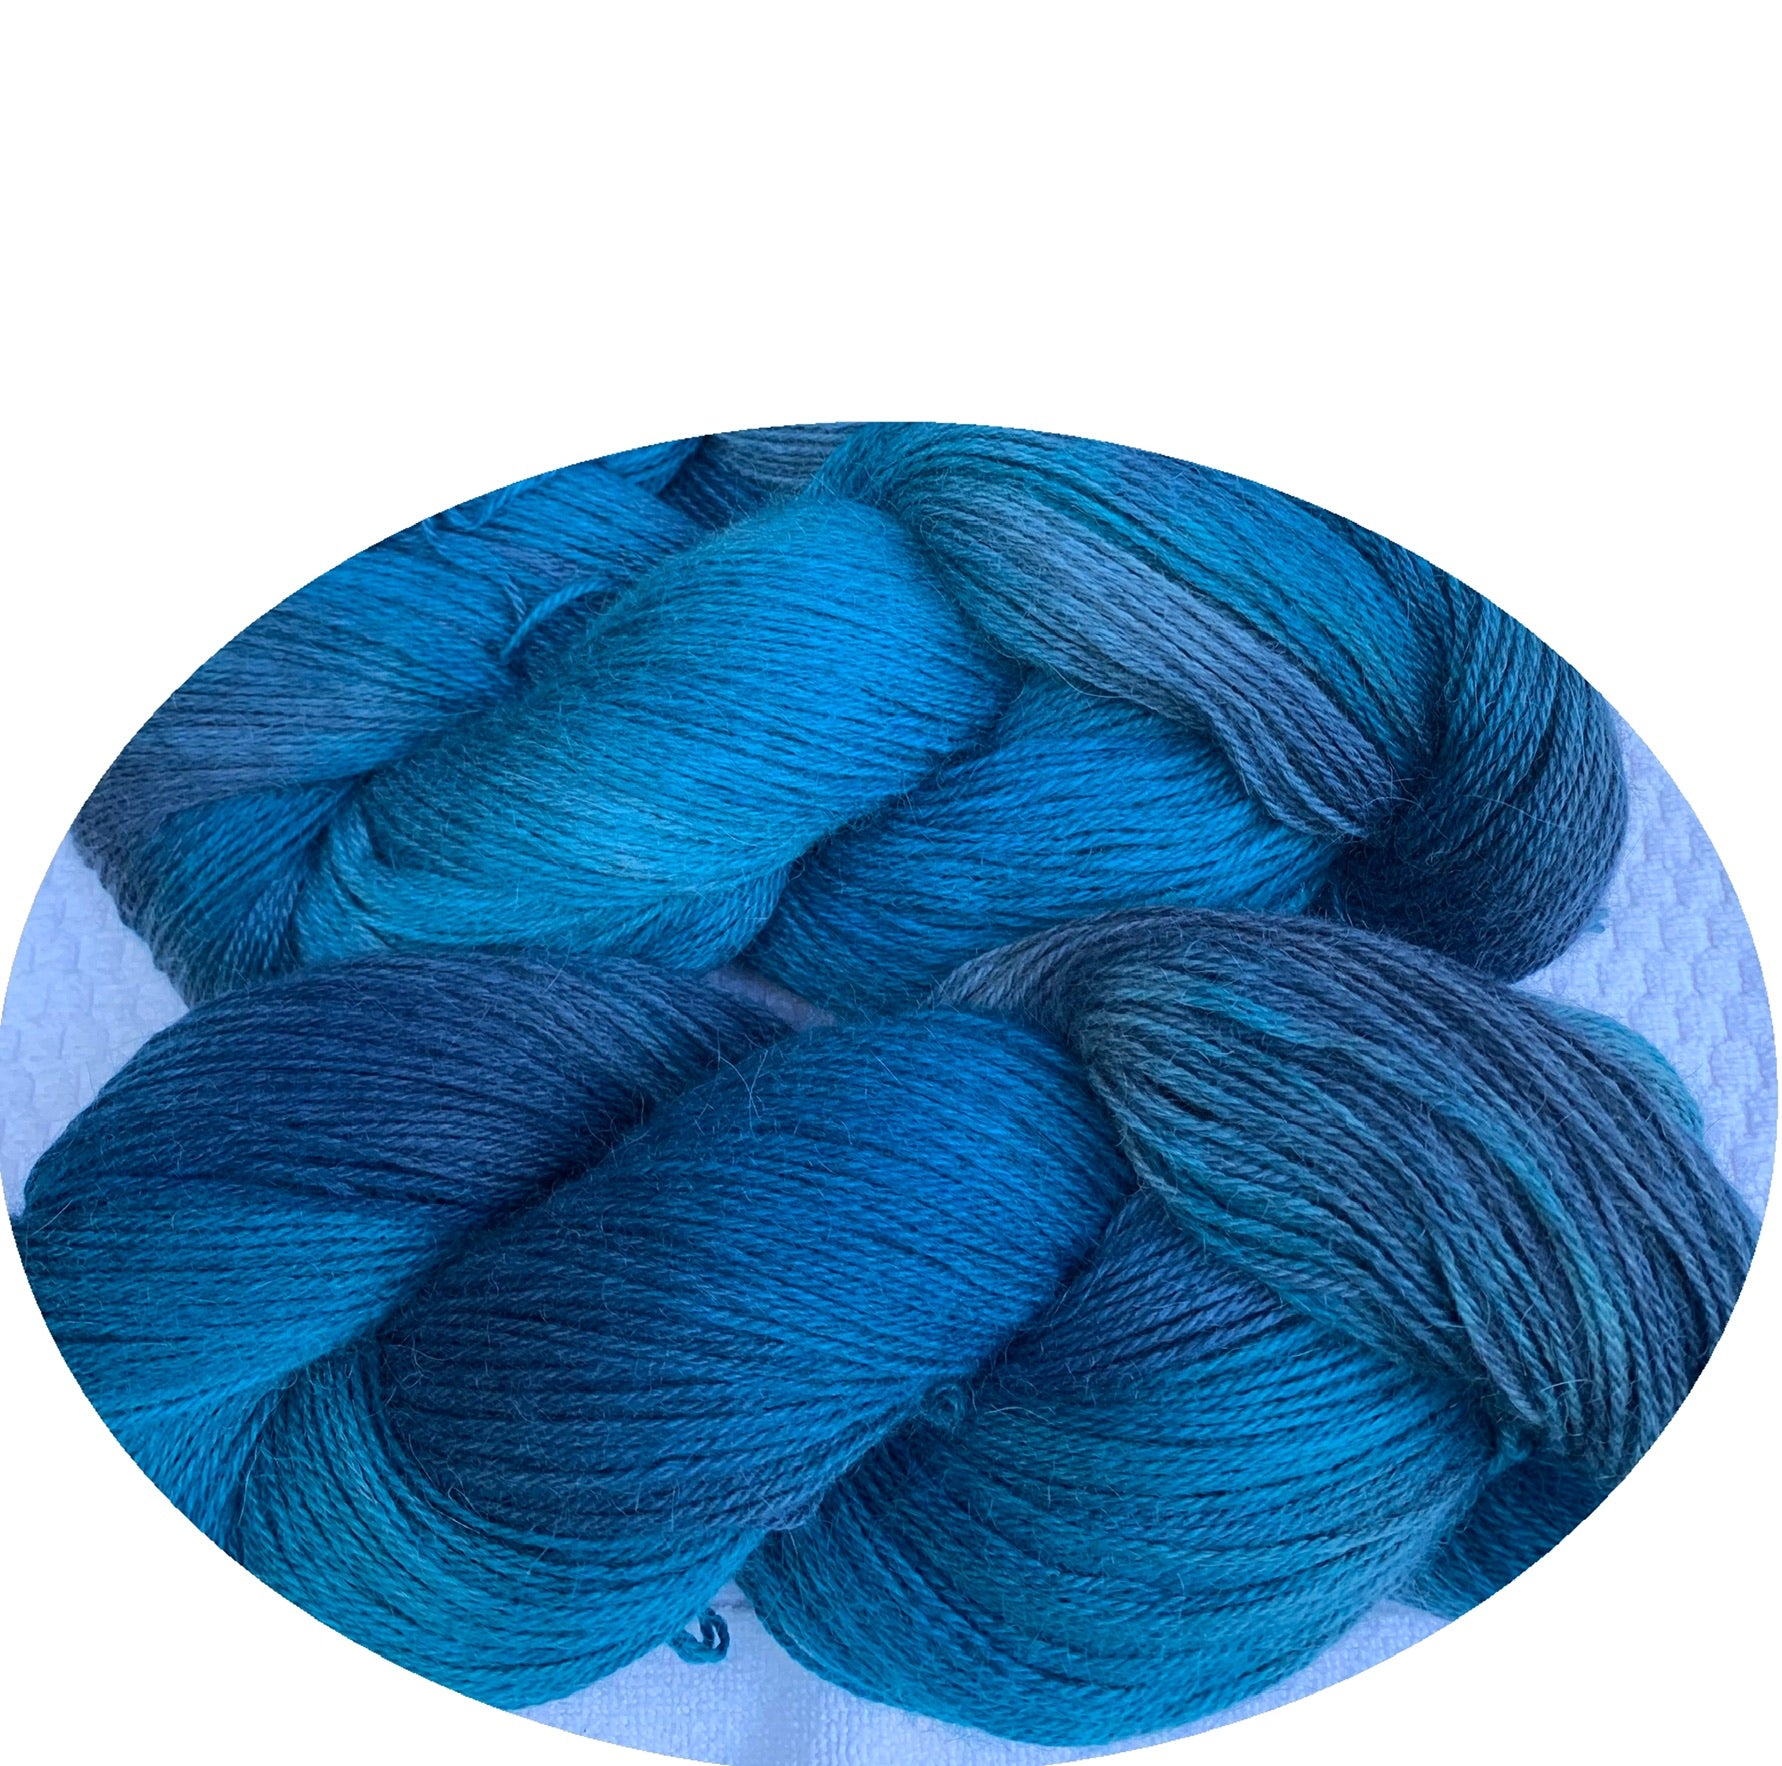 Indigo Blue is an Antidote at Sheepscot Harbor Yarns – Heavenly